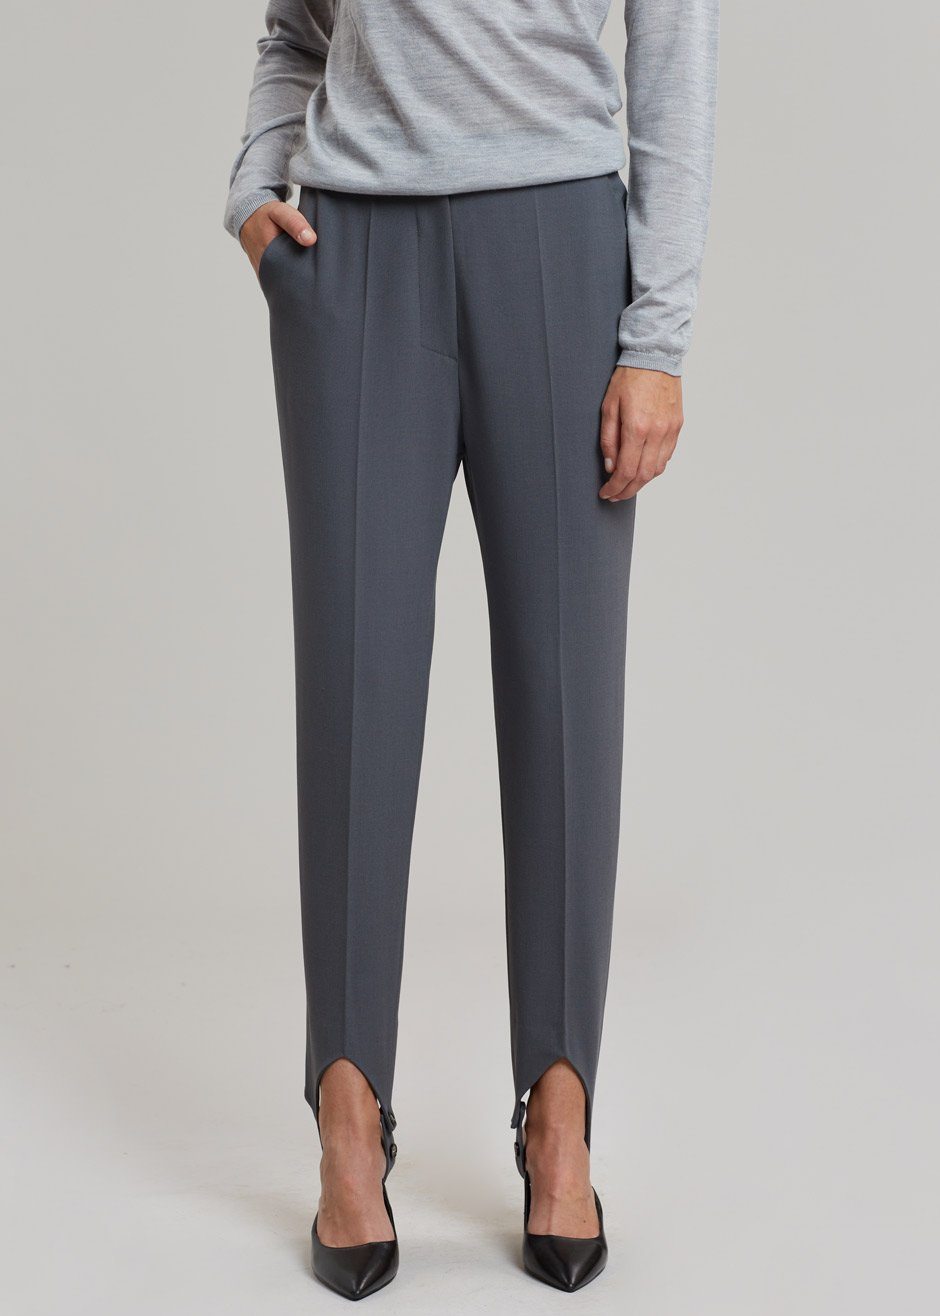 Nanushka Darby Stirrup Suit Pants - Grey - 6